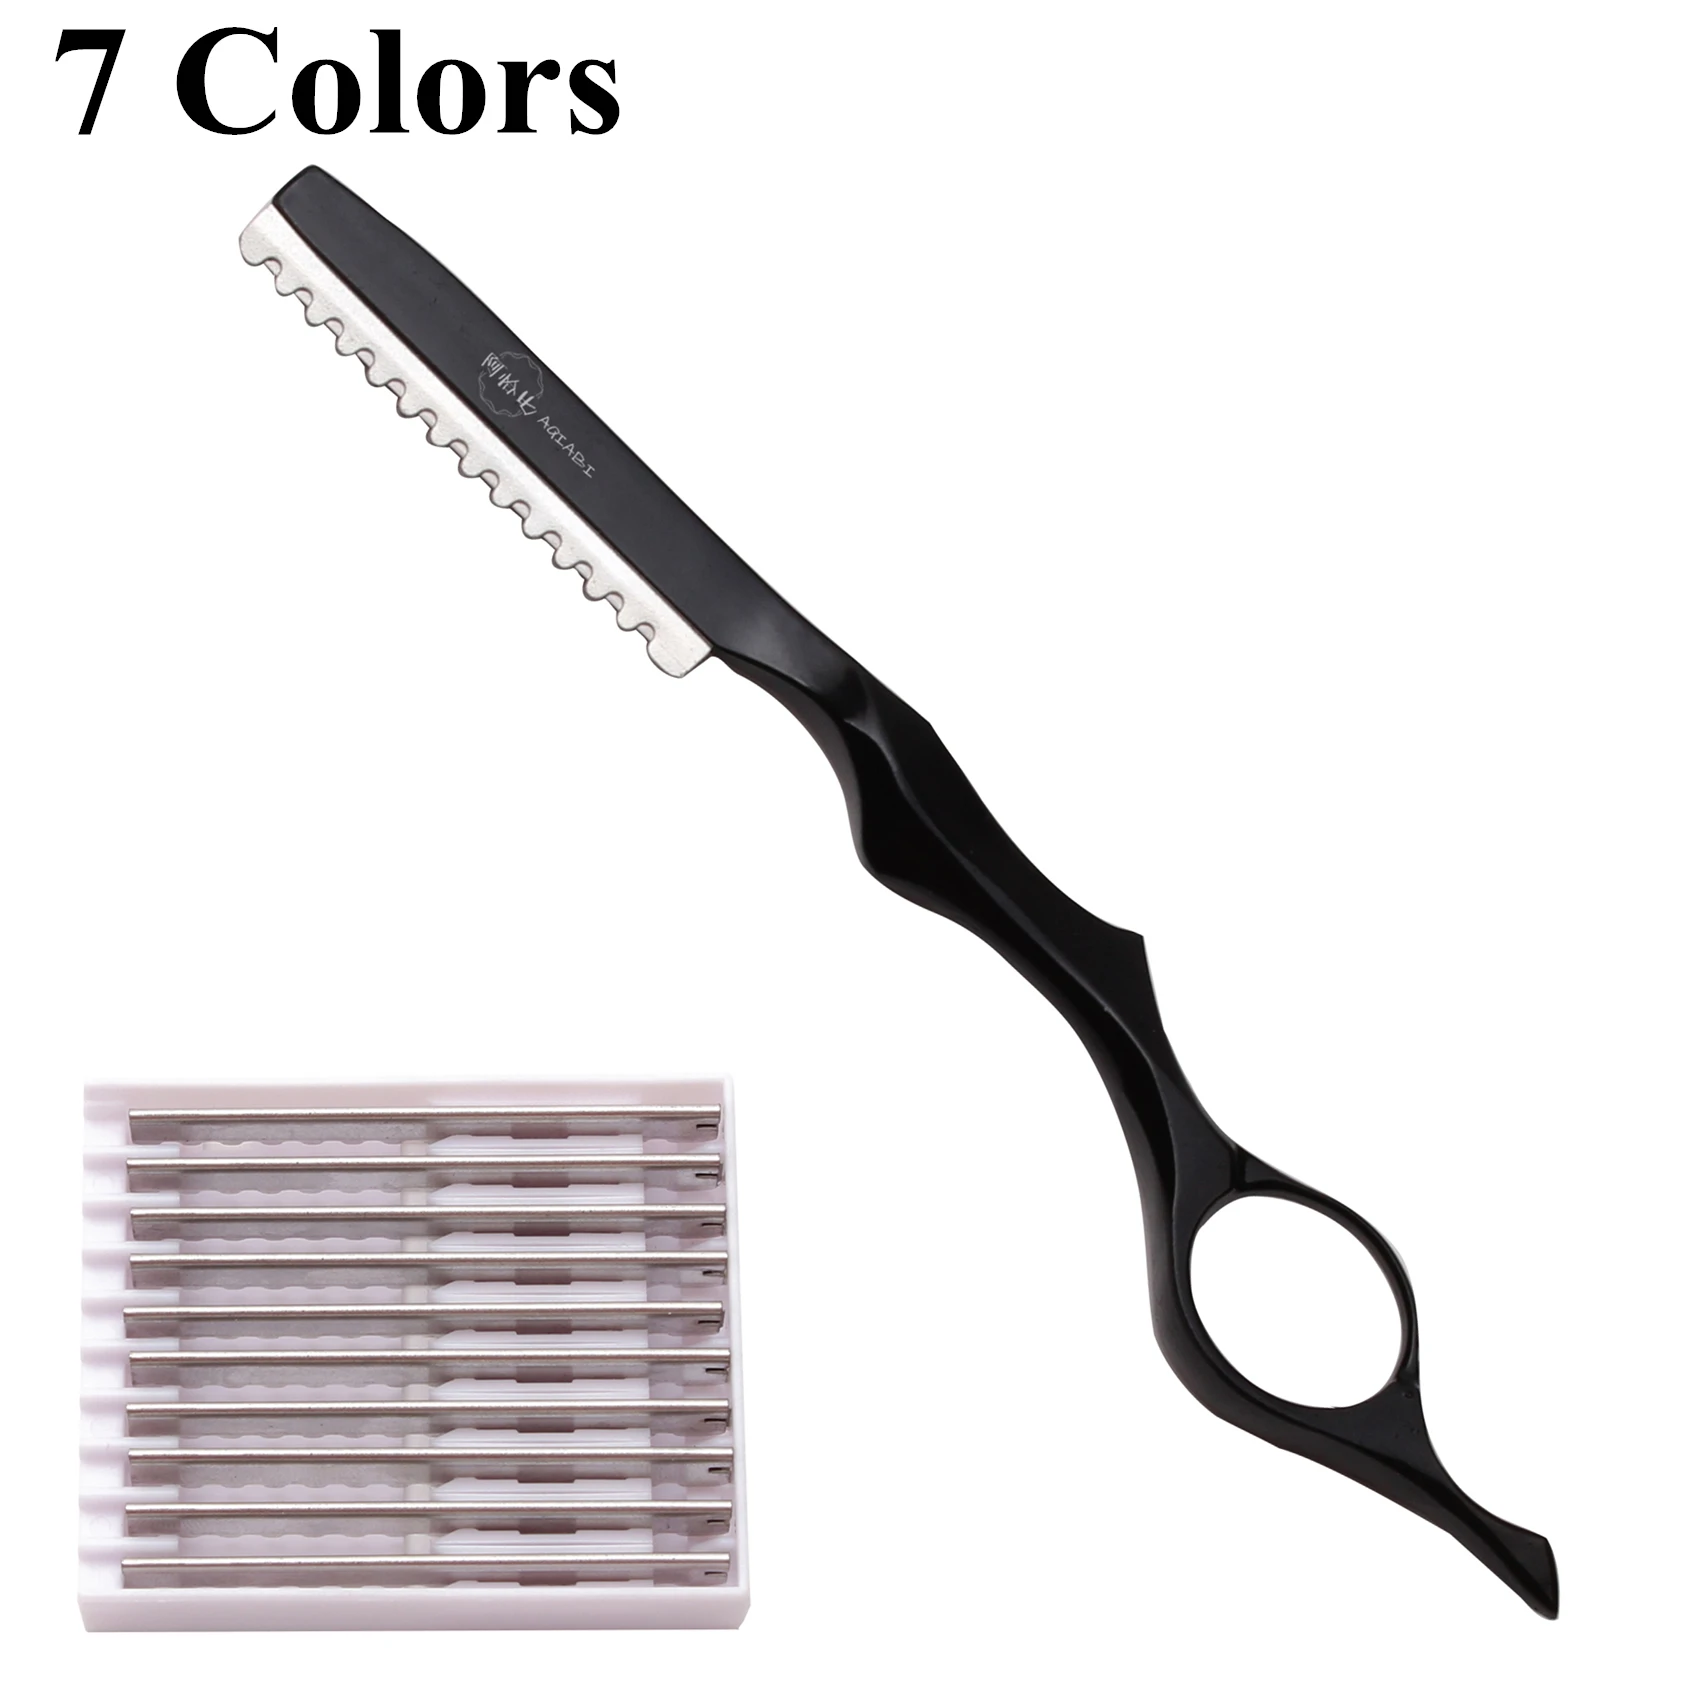 

Stainless Steel Professional Salon Sharp Barber Razor Blade Hair Razors Cut Hair Cutting Thinning Knife 100Pcs +100 Blades A6100, Shiny/black/gold/colorful